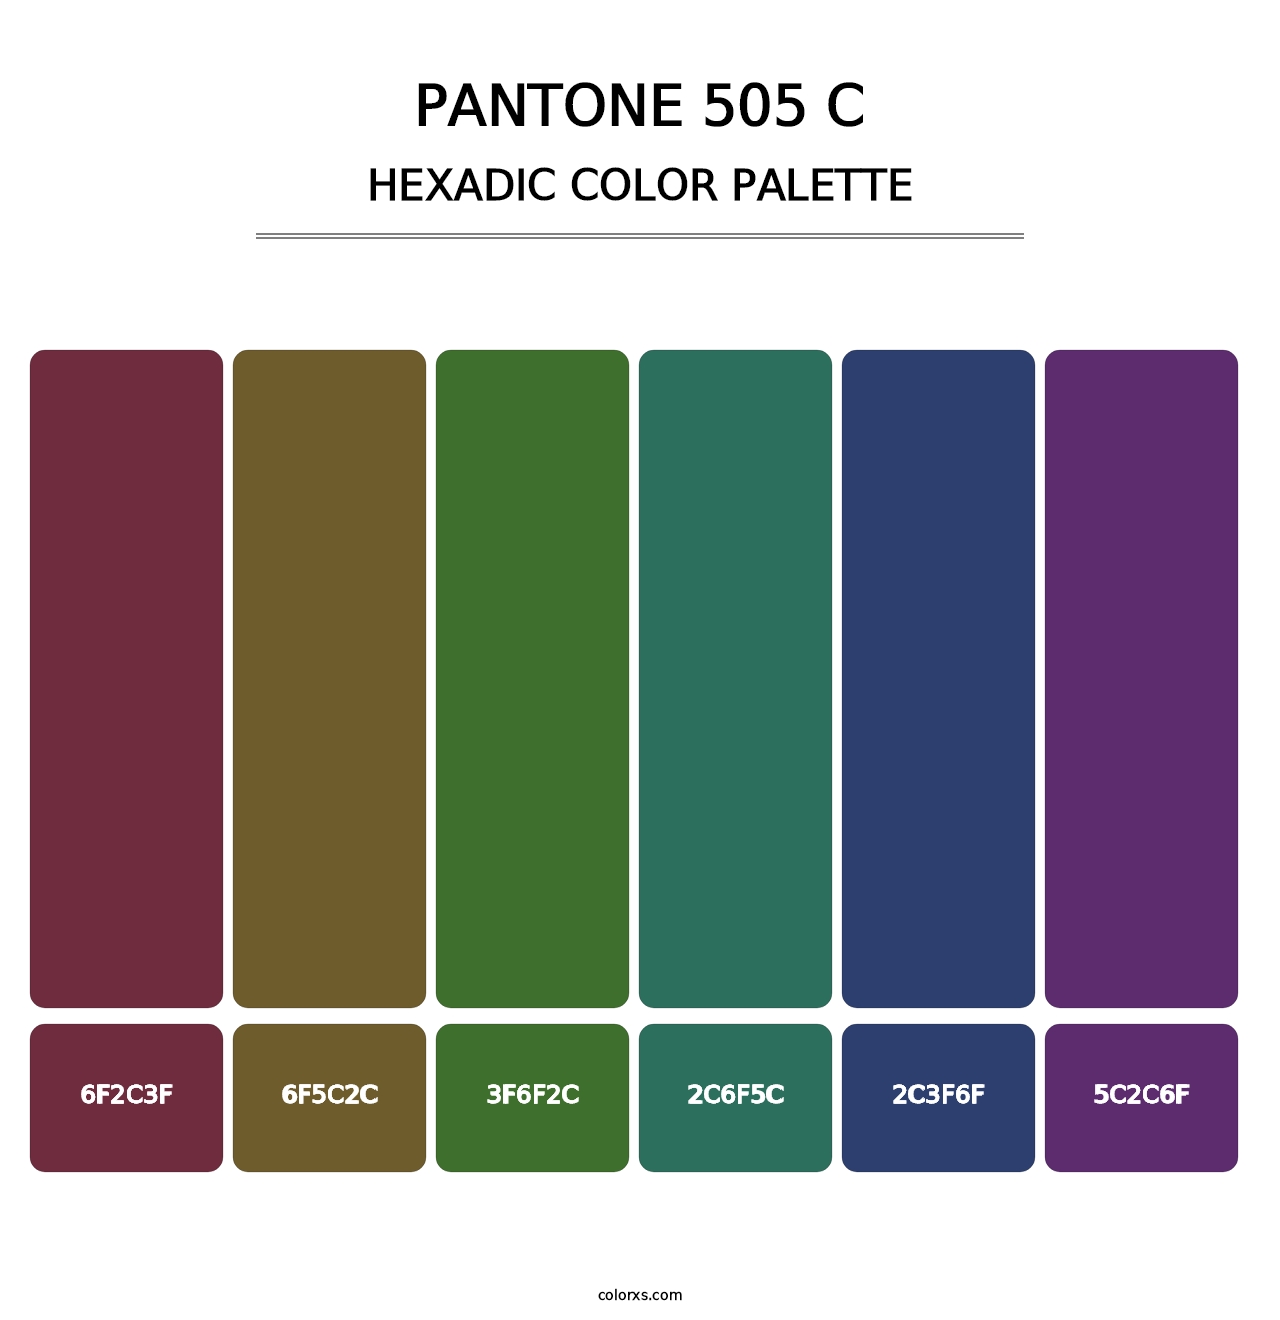 PANTONE 505 C - Hexadic Color Palette